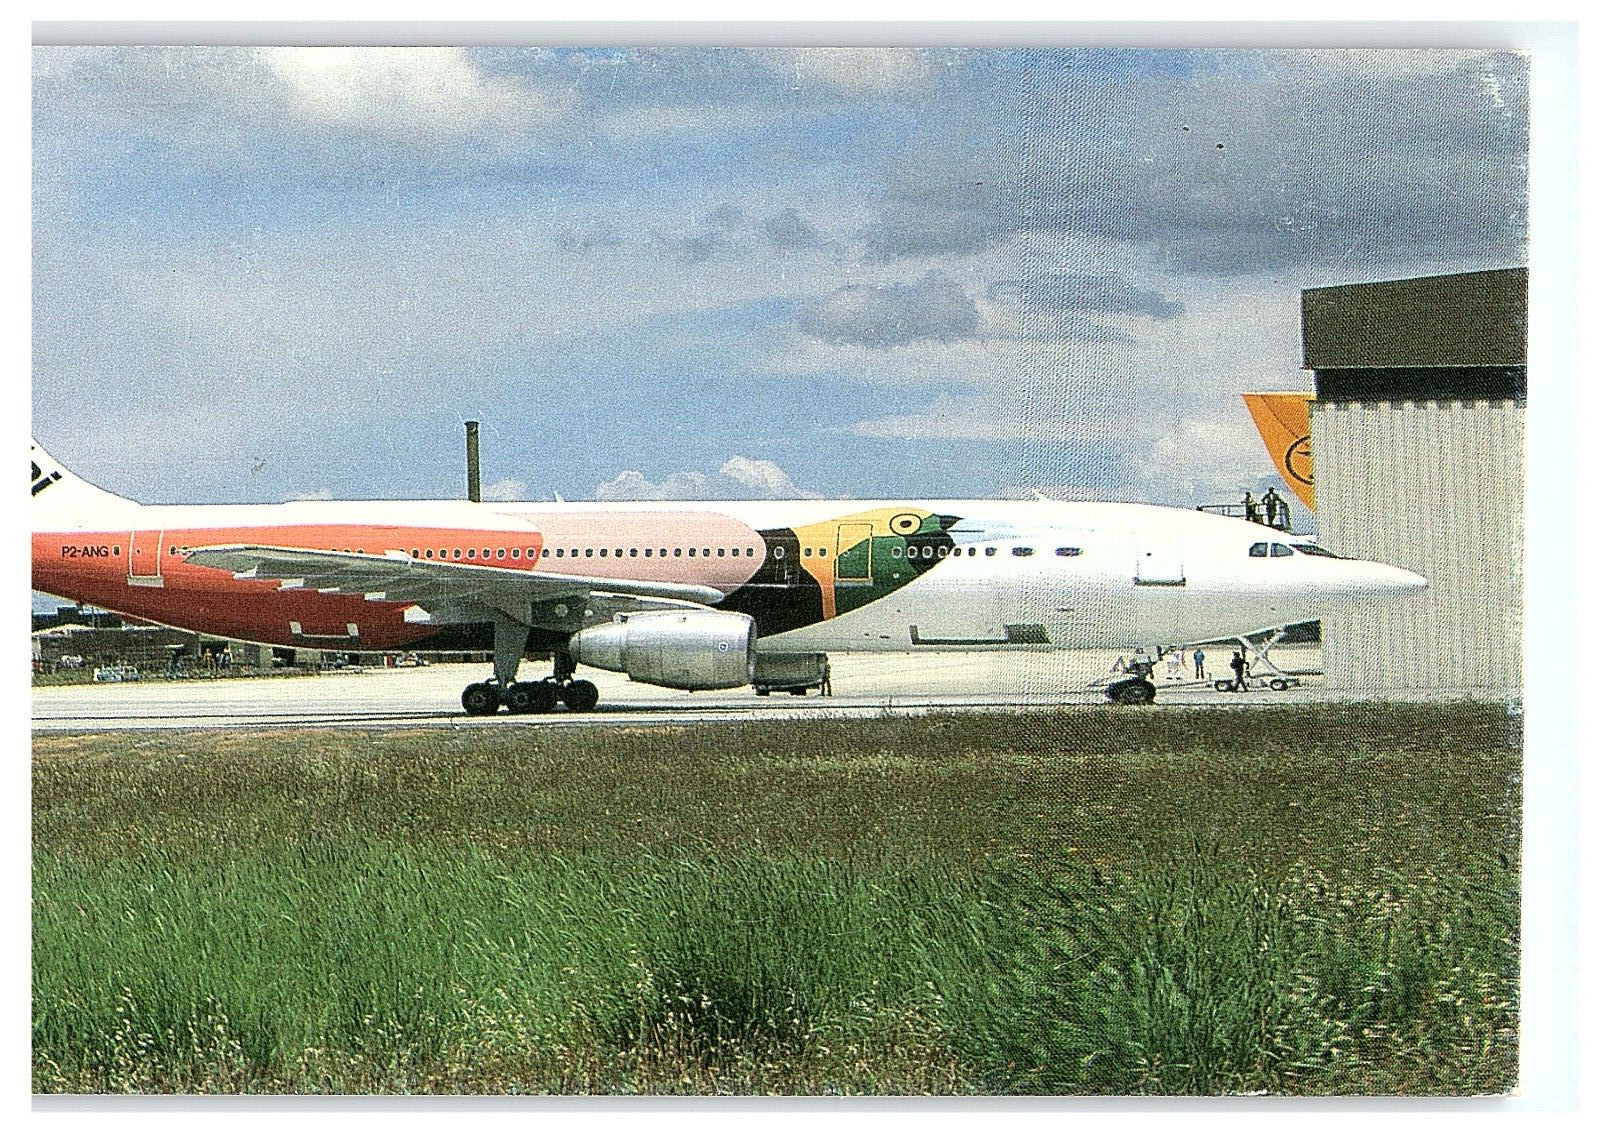 Air Niugini A 300 Airbus at Melbourne Airplane Postcard